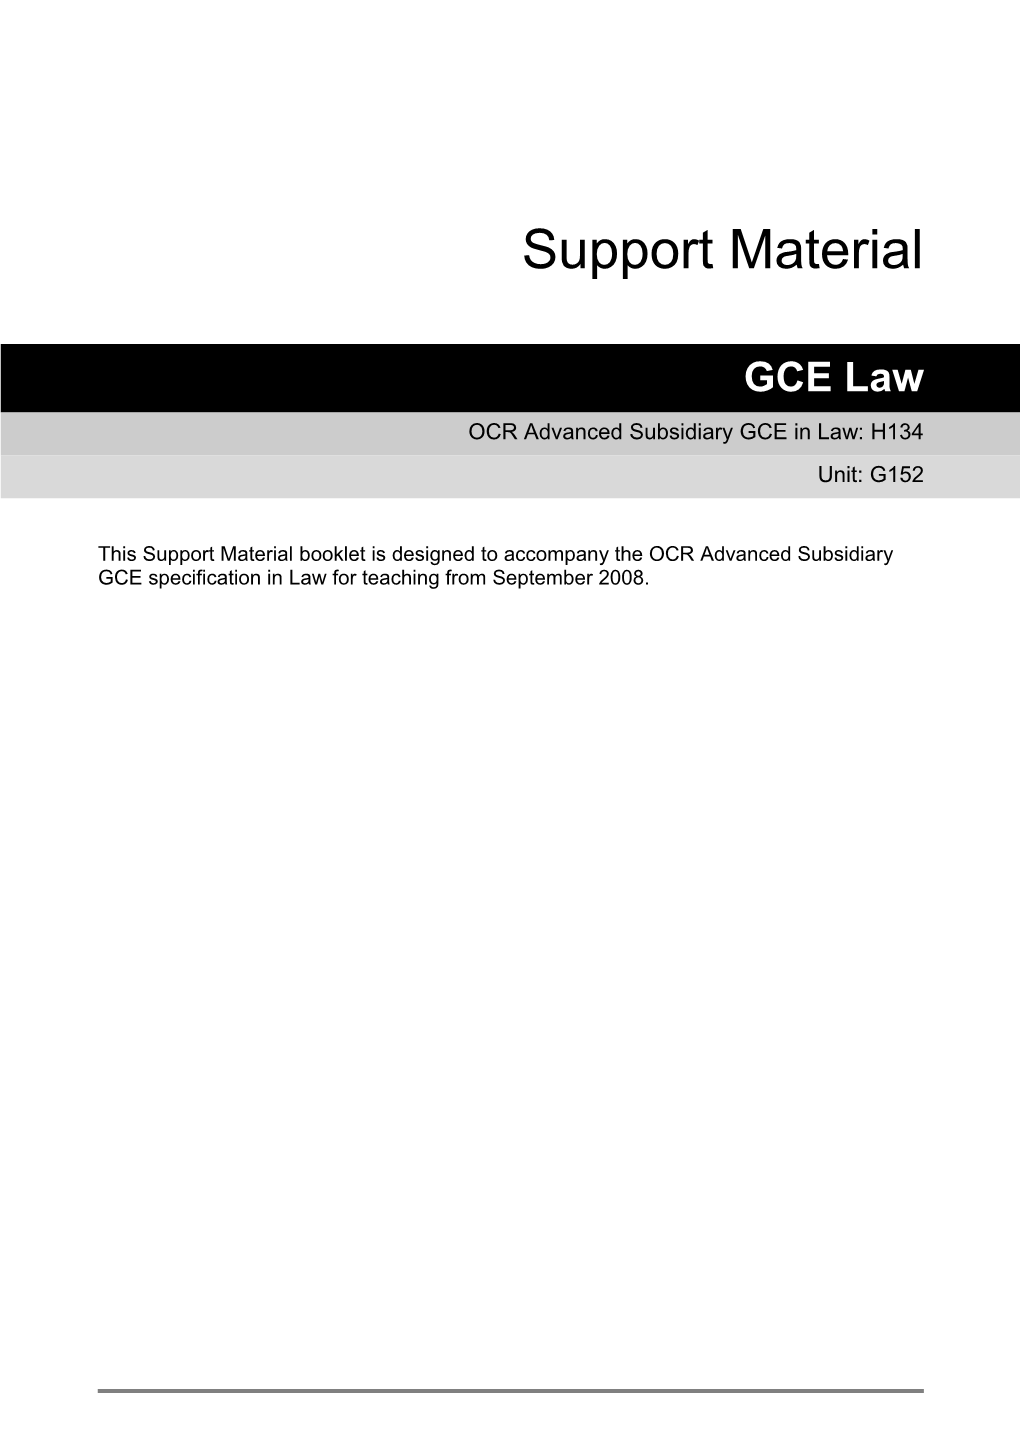 Schemes of Work: GCE Law H134: Unit G152